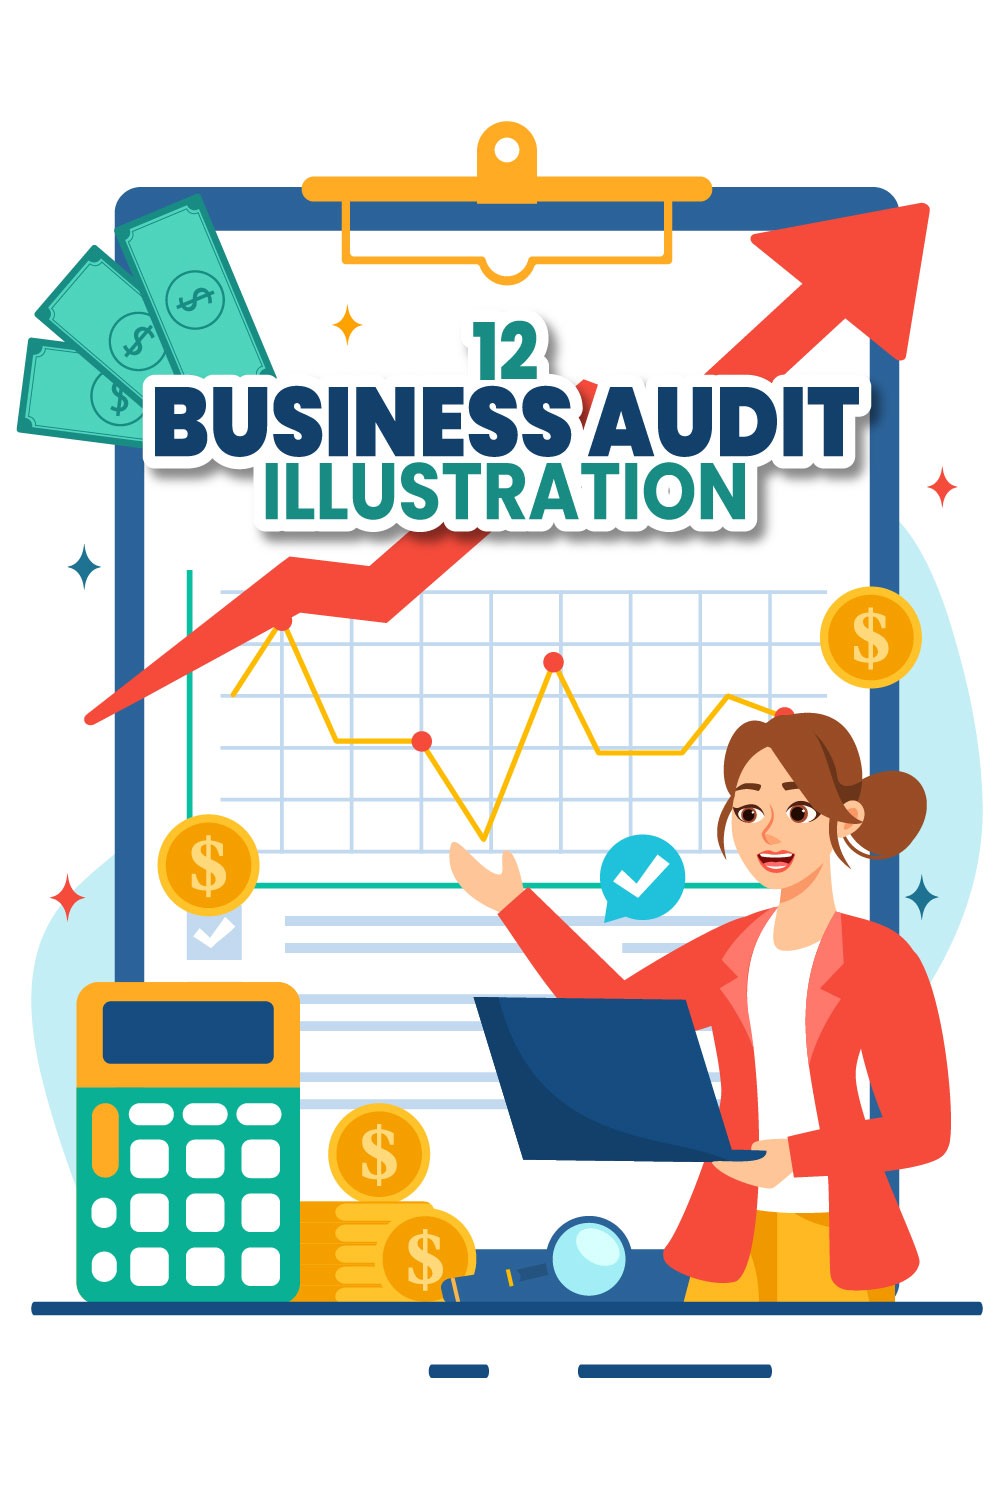 12 Business Audit Documents Illustration pinterest preview image.